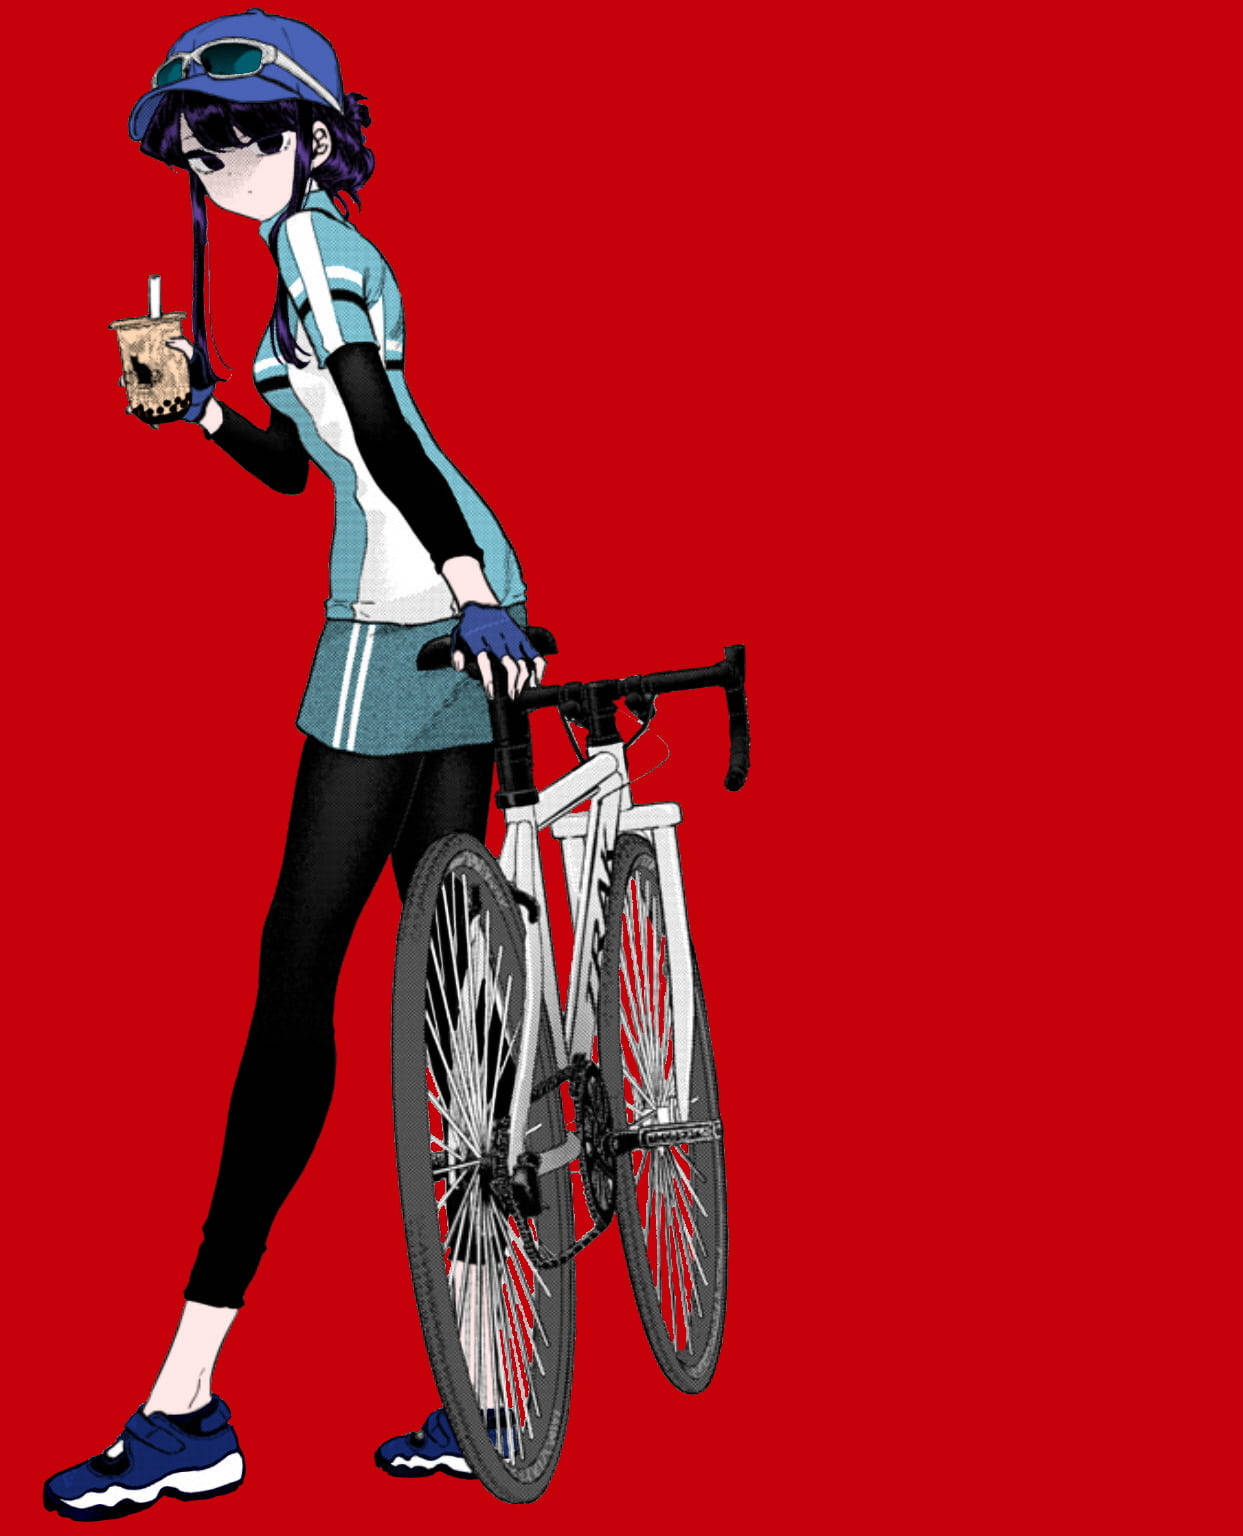 Komi San With Her Road Bike